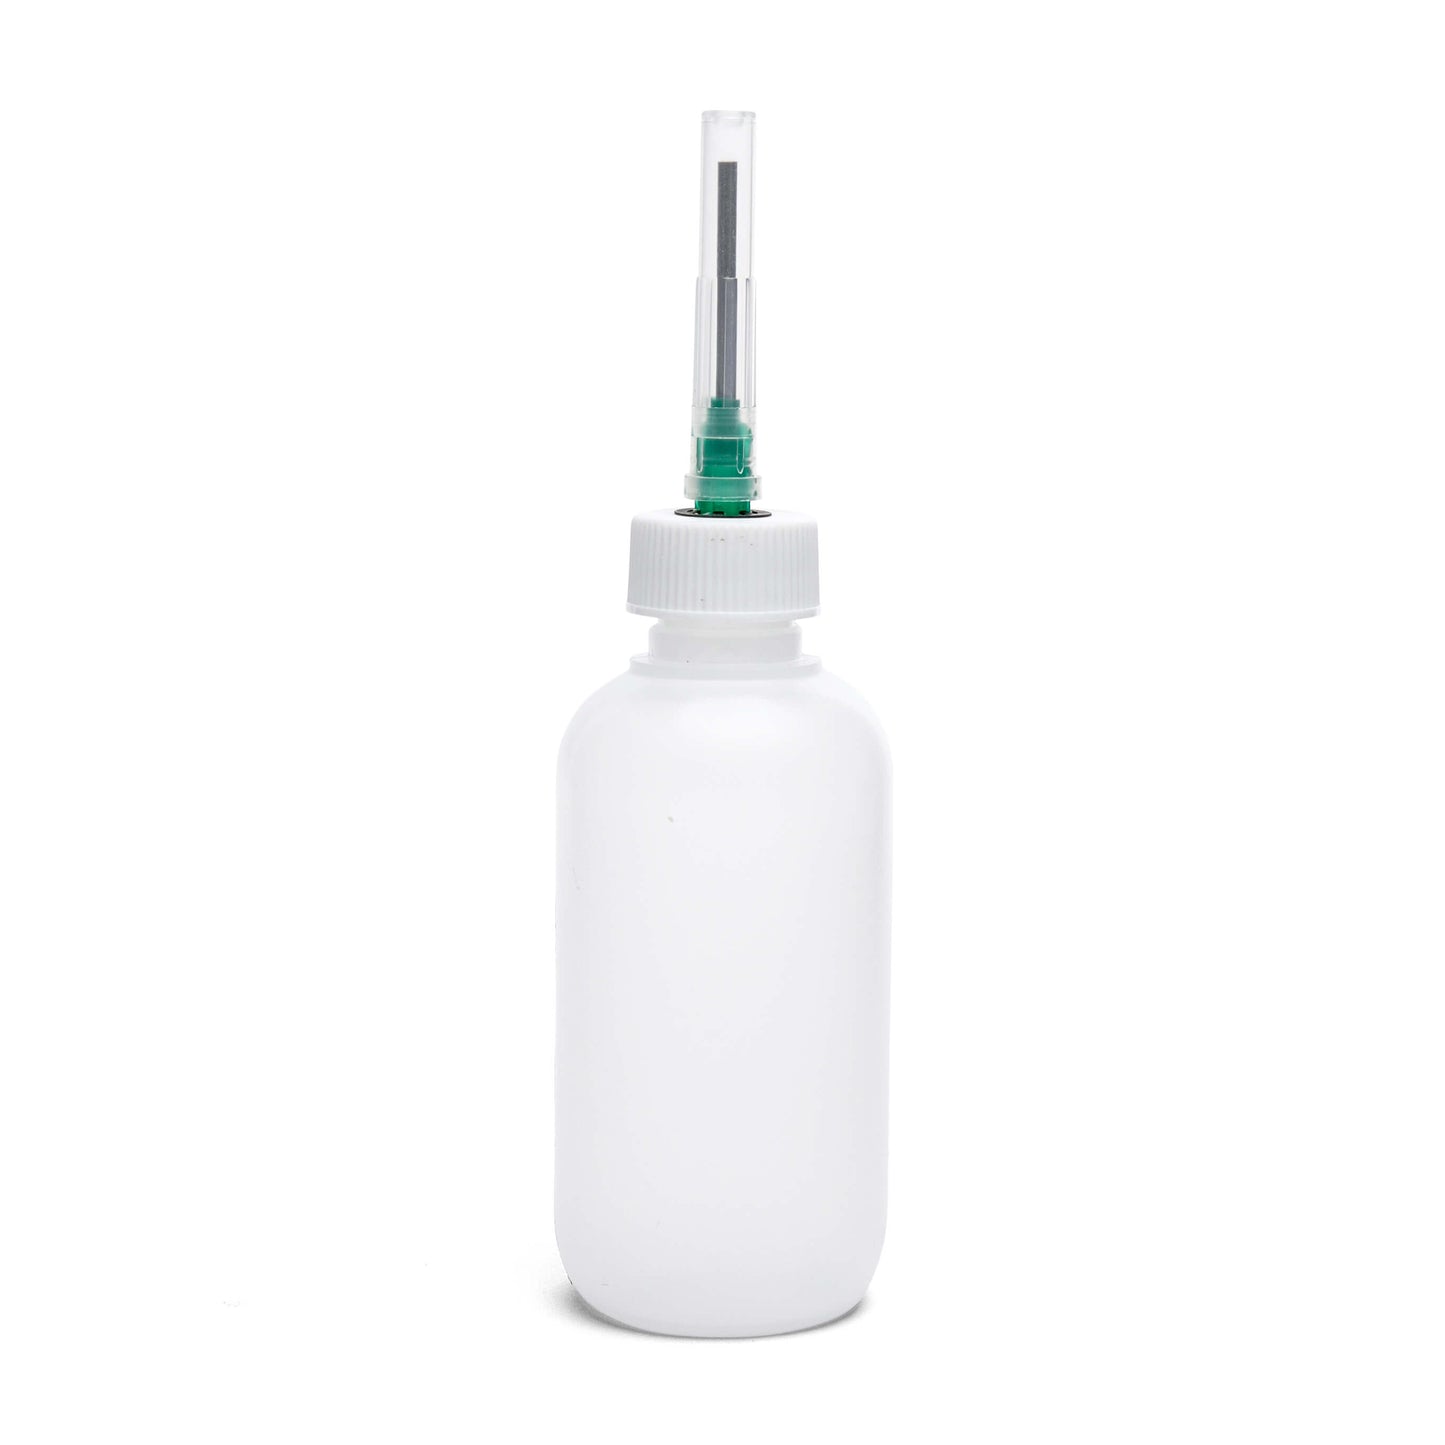 Applicator Bottle Squeeze Dispensers - Round Bottle - 25ga x 1" Needle